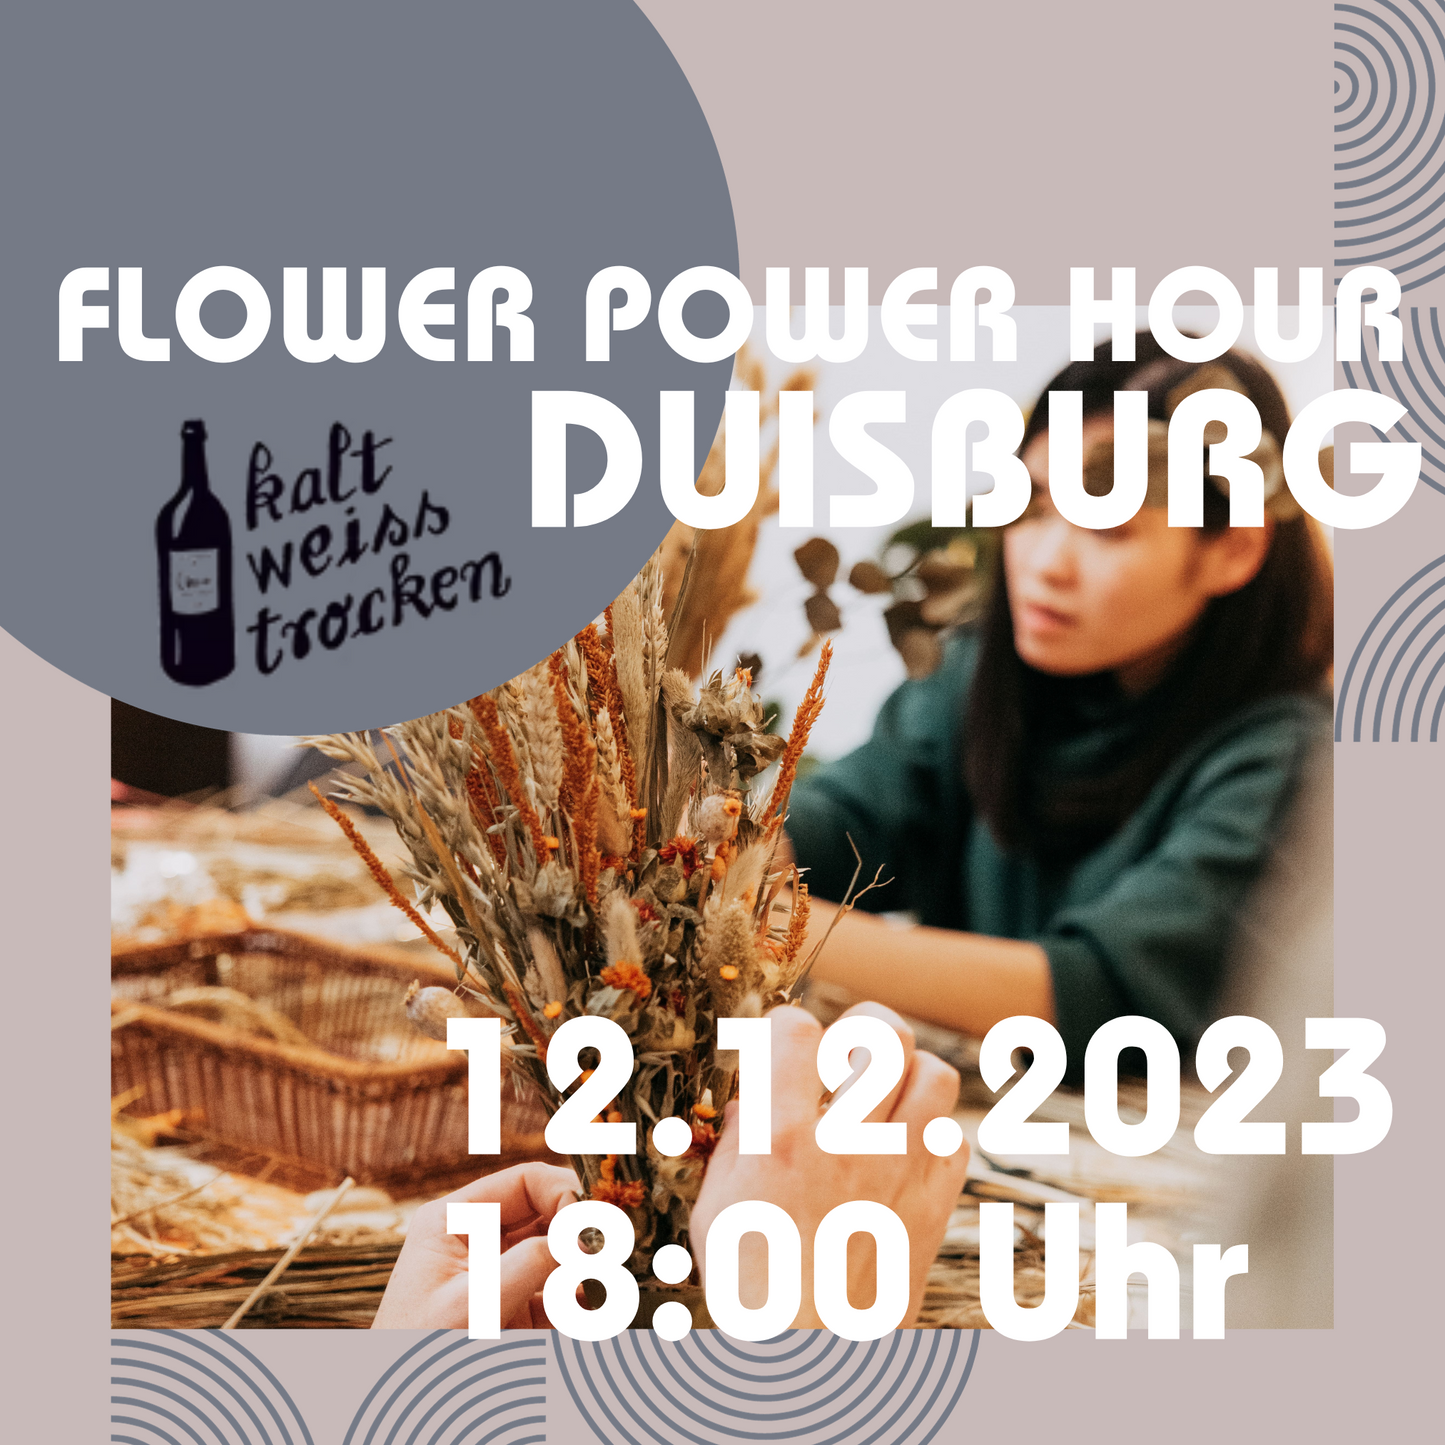 FLOWER POWER HOUR - Trockenblumenbouquet Workshop kalt.weiss.trocken. Duisburg 12.12.2023 18 Uhr